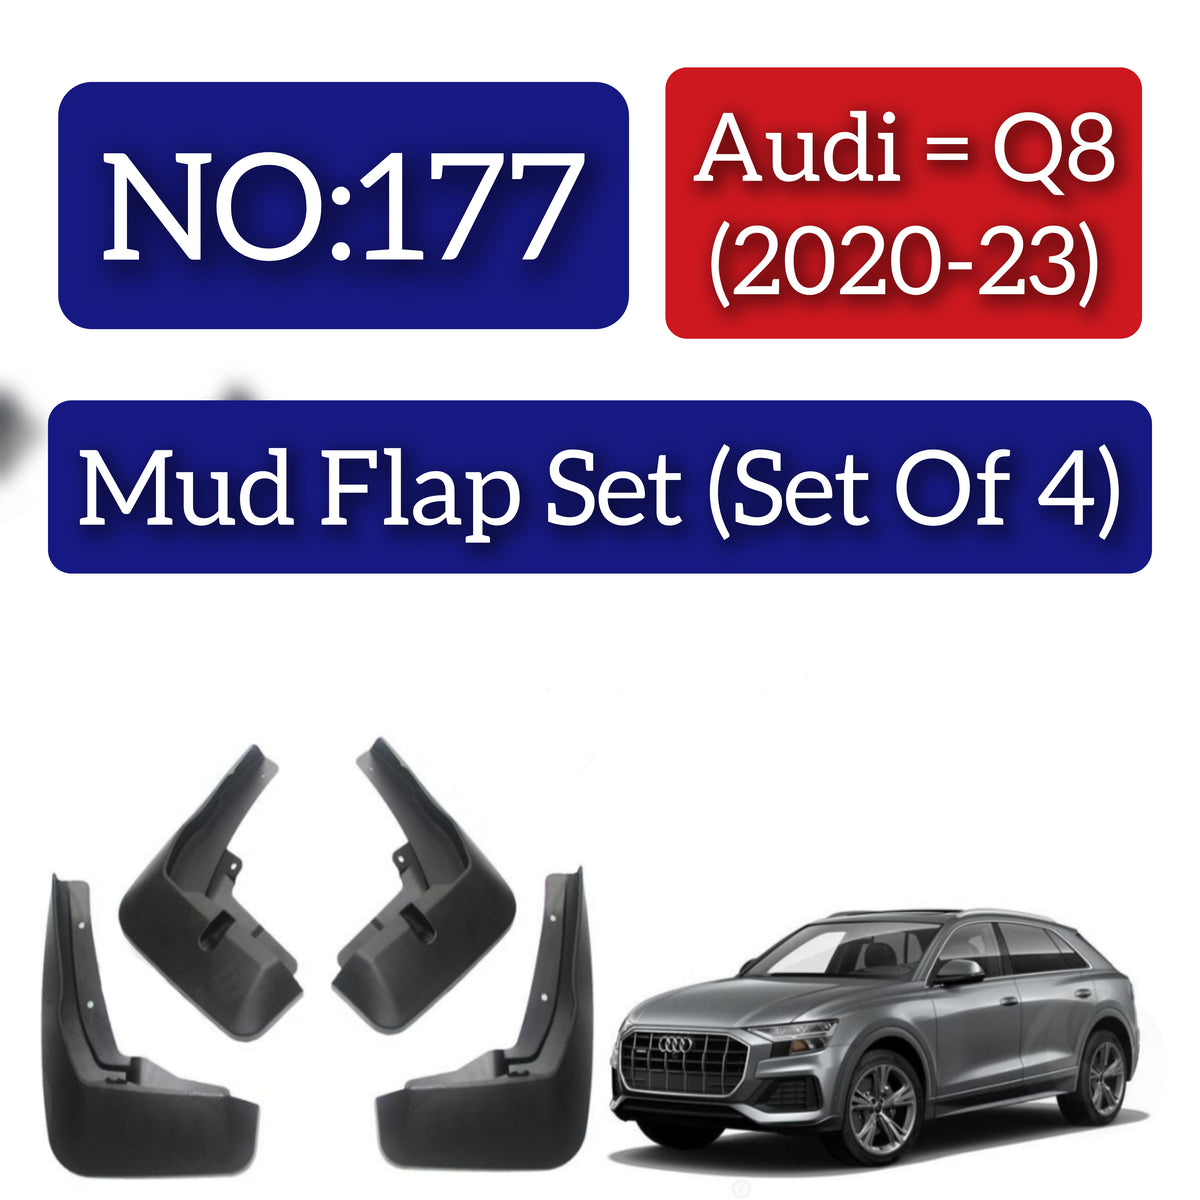 Audi Q8 (2020-23) Mud Flap Set (Set of 4) Tag 177